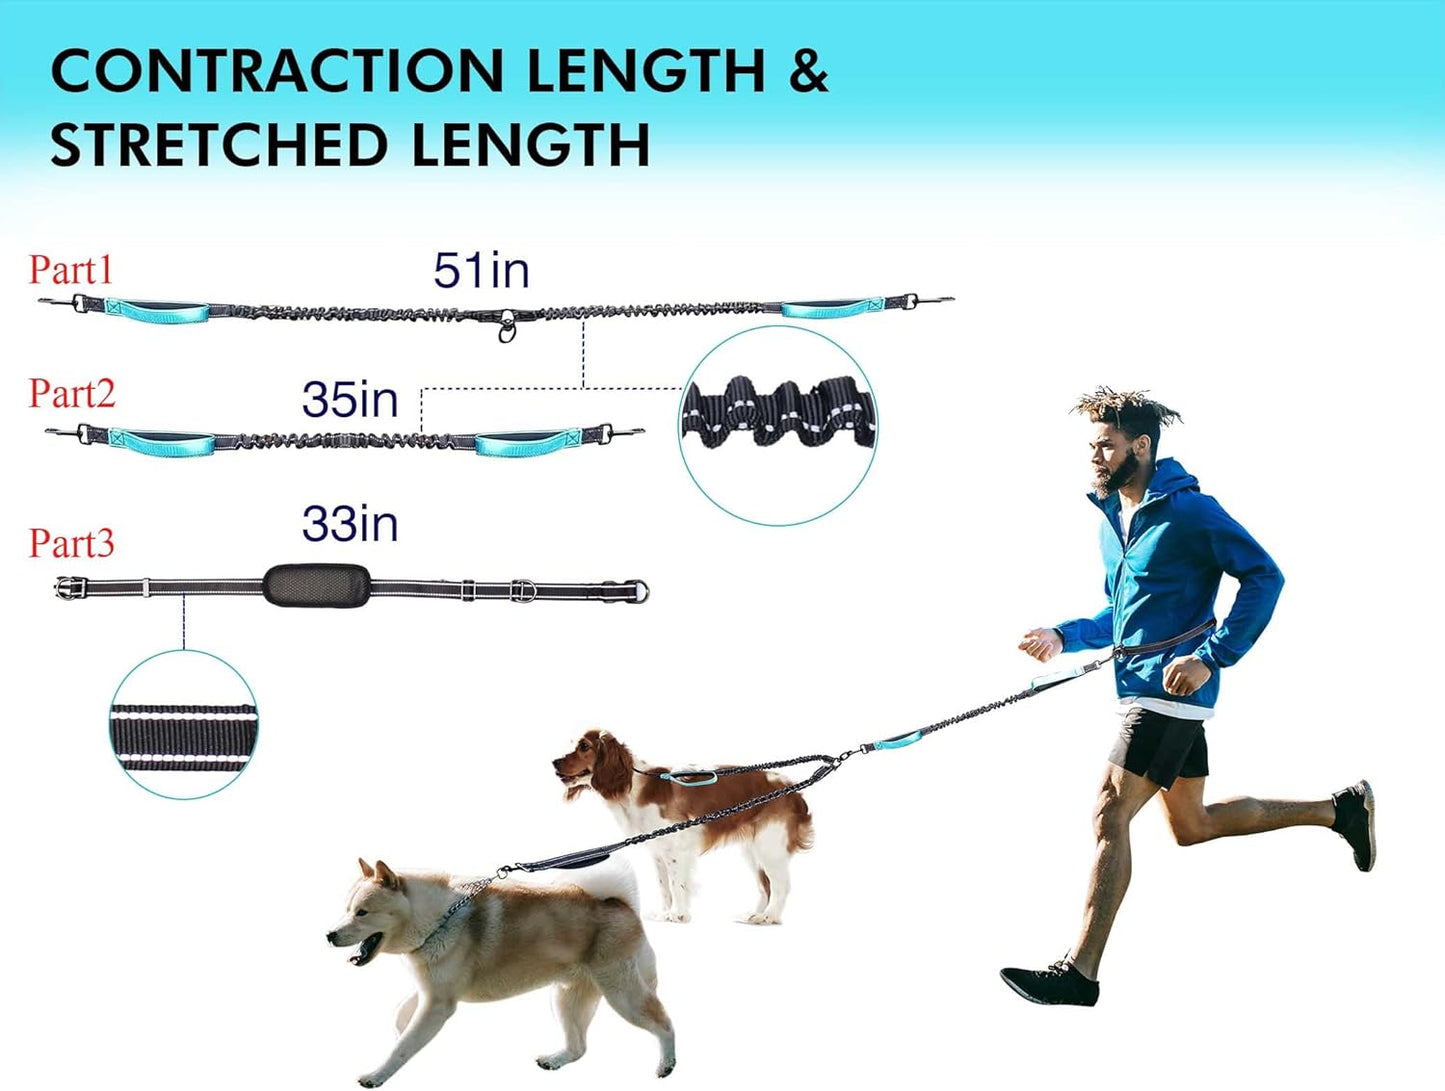 Hands Free Dog Leash, Double Dog Leash, Waist Dog Running Leash for Comfortable Walking Jogging Training Hiking, Long Padded No Tangle 360° Swivel Clasp Adjustable Dual Dog Lead Leashes